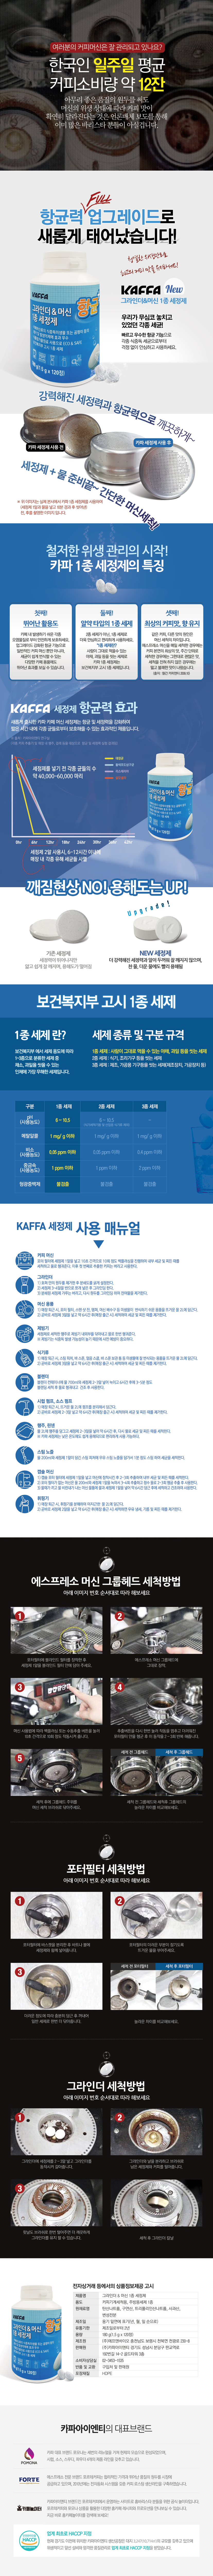 Kaffa_CoffeeMachineCleanser